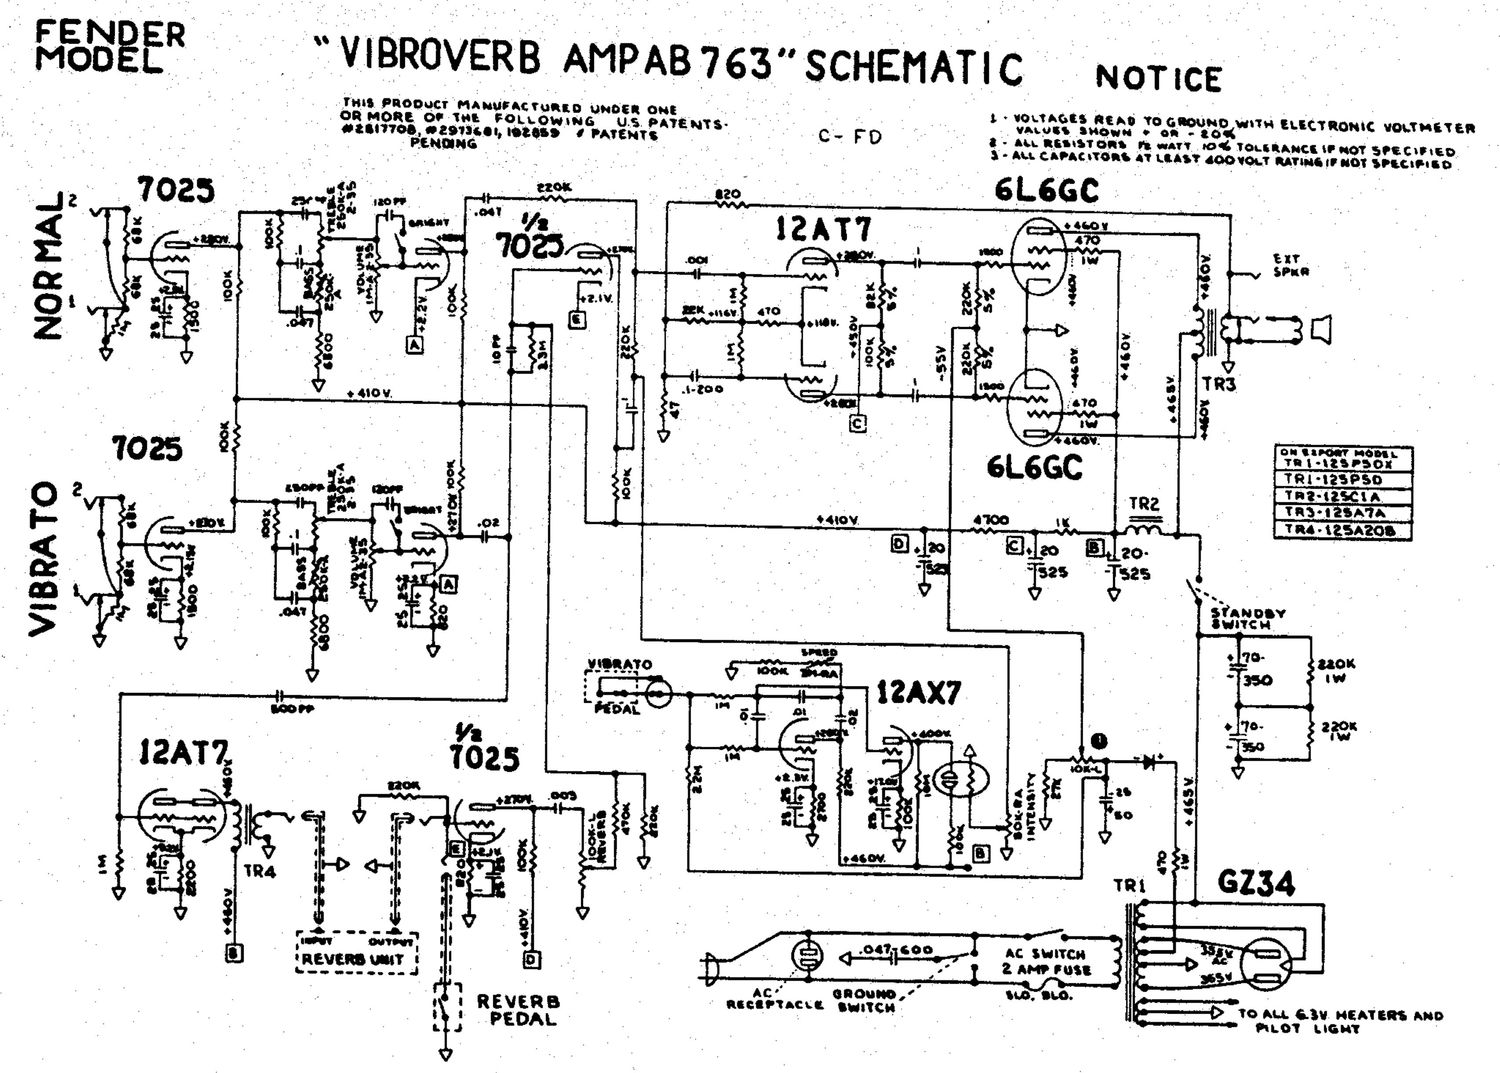 fender vibroverb ab763 schematic